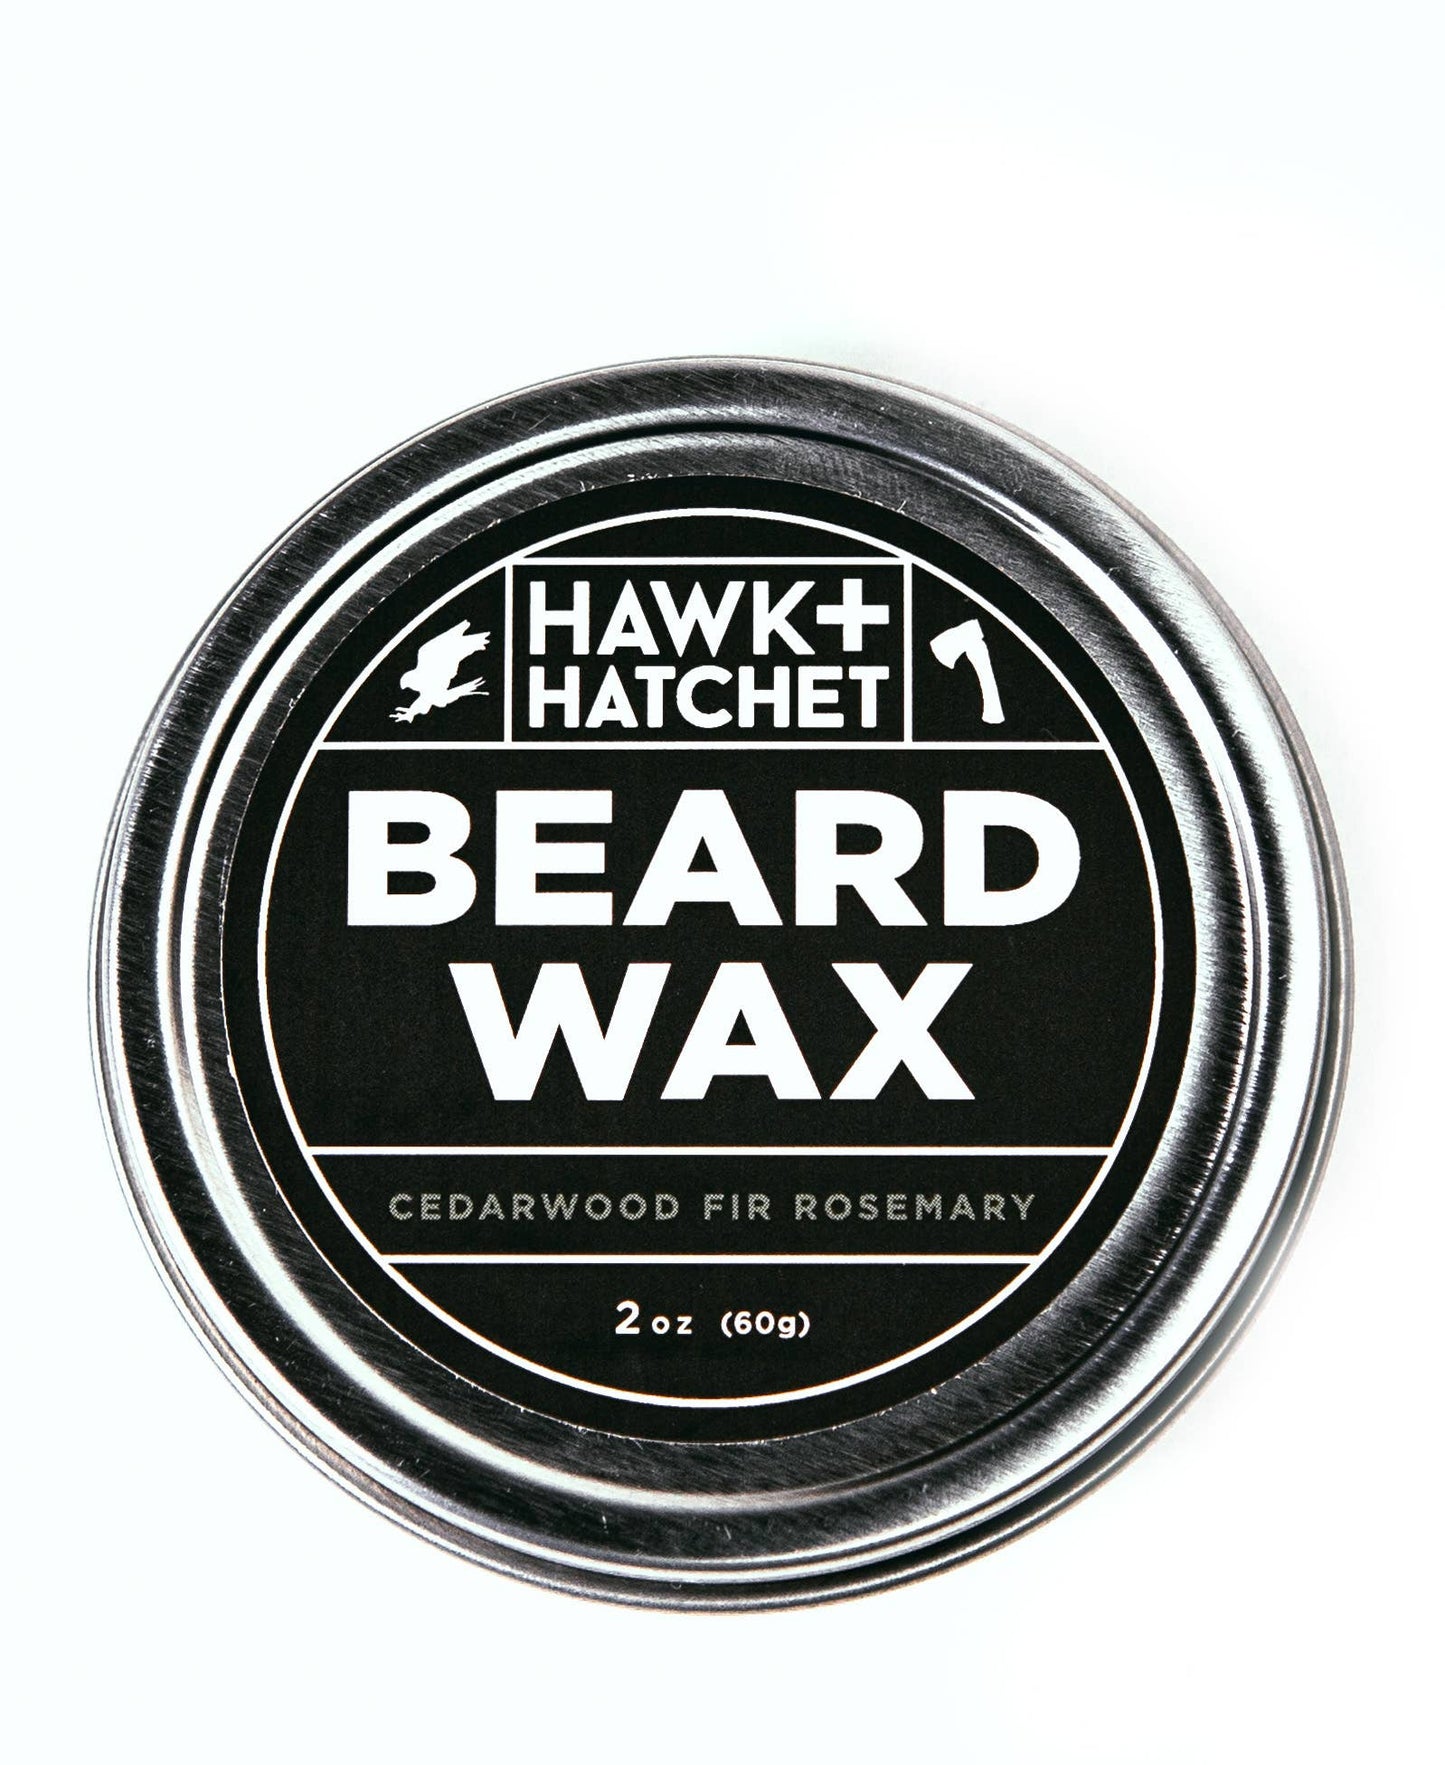 "Hawk & Hatchet" Beard Wax - Cedarwood, Fir and Rosemary